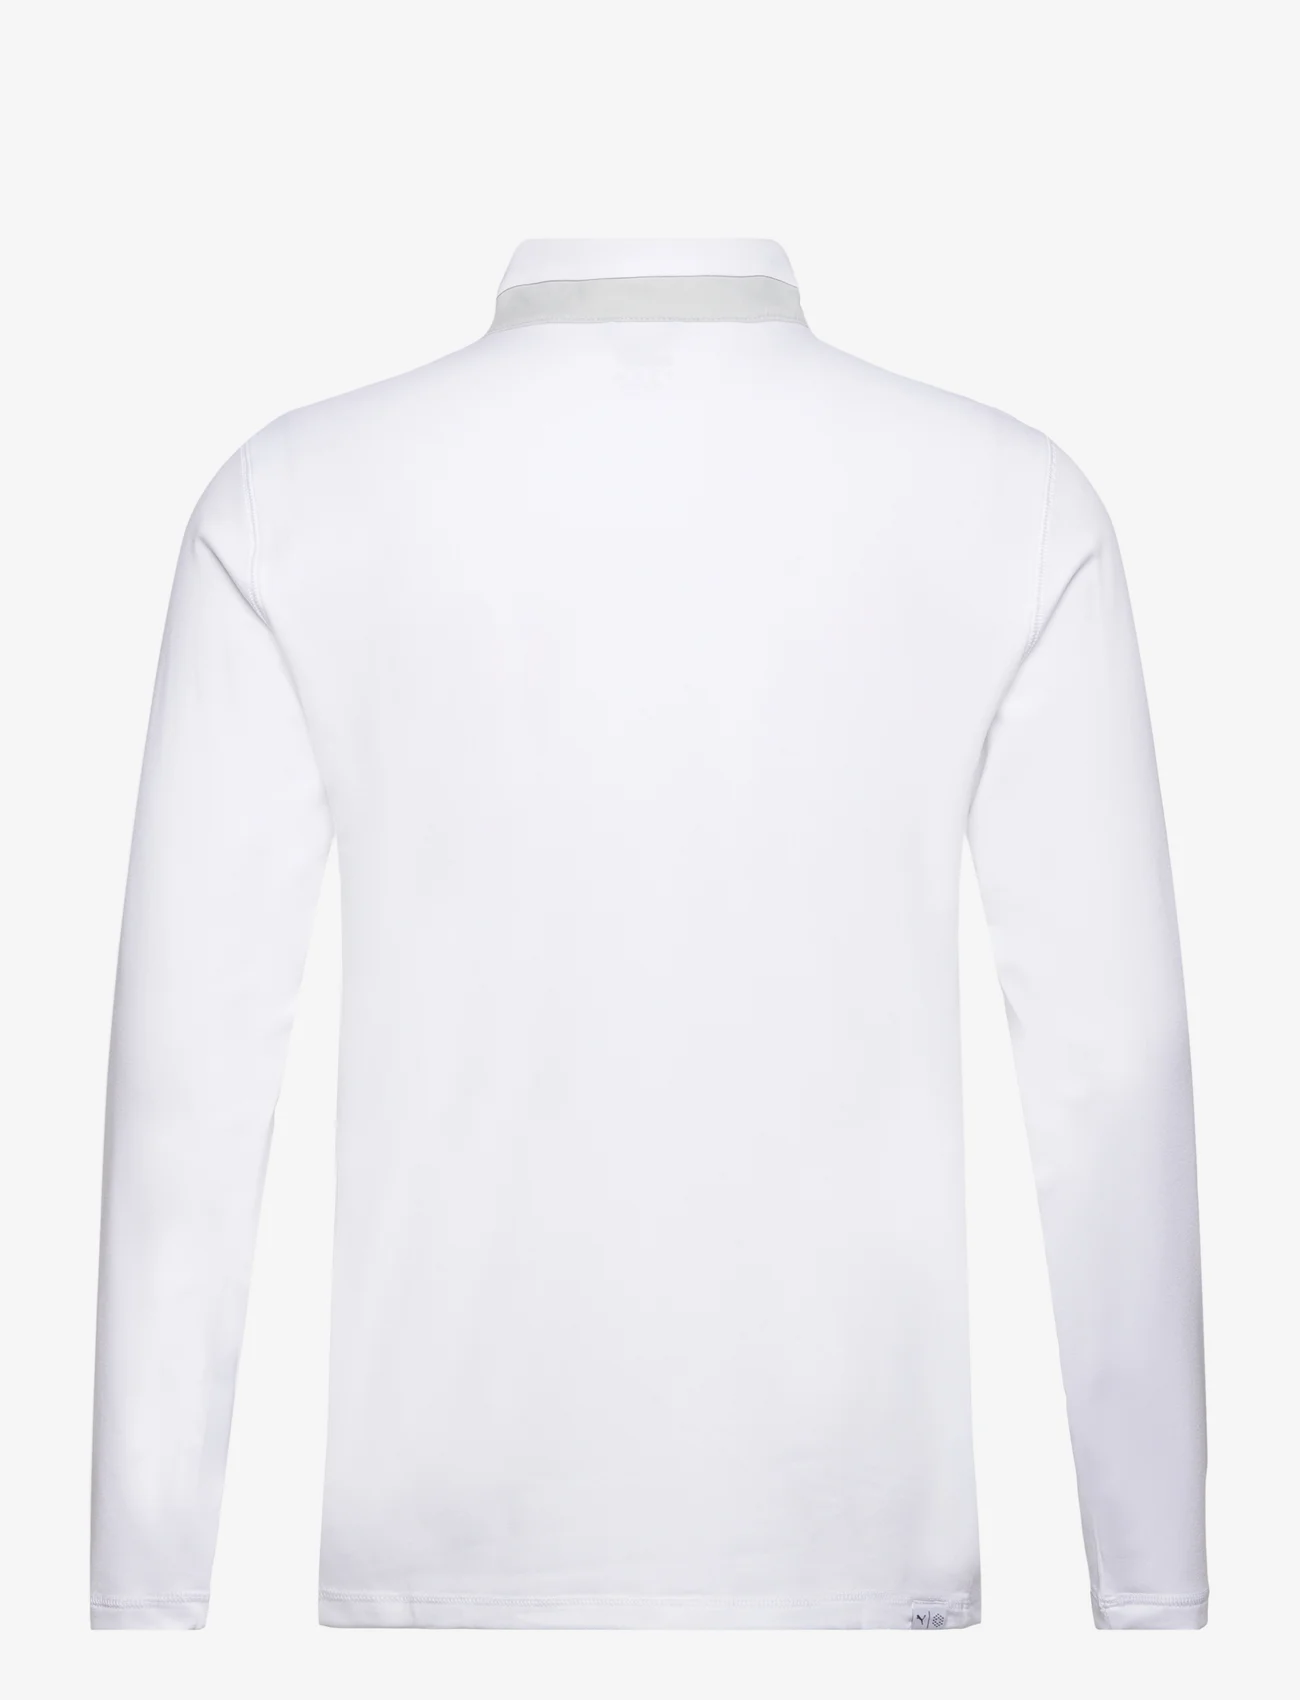 PUMA Golf - Lightweight 1/4 Zip - mid layer jackets - white glow-ash gray - 1